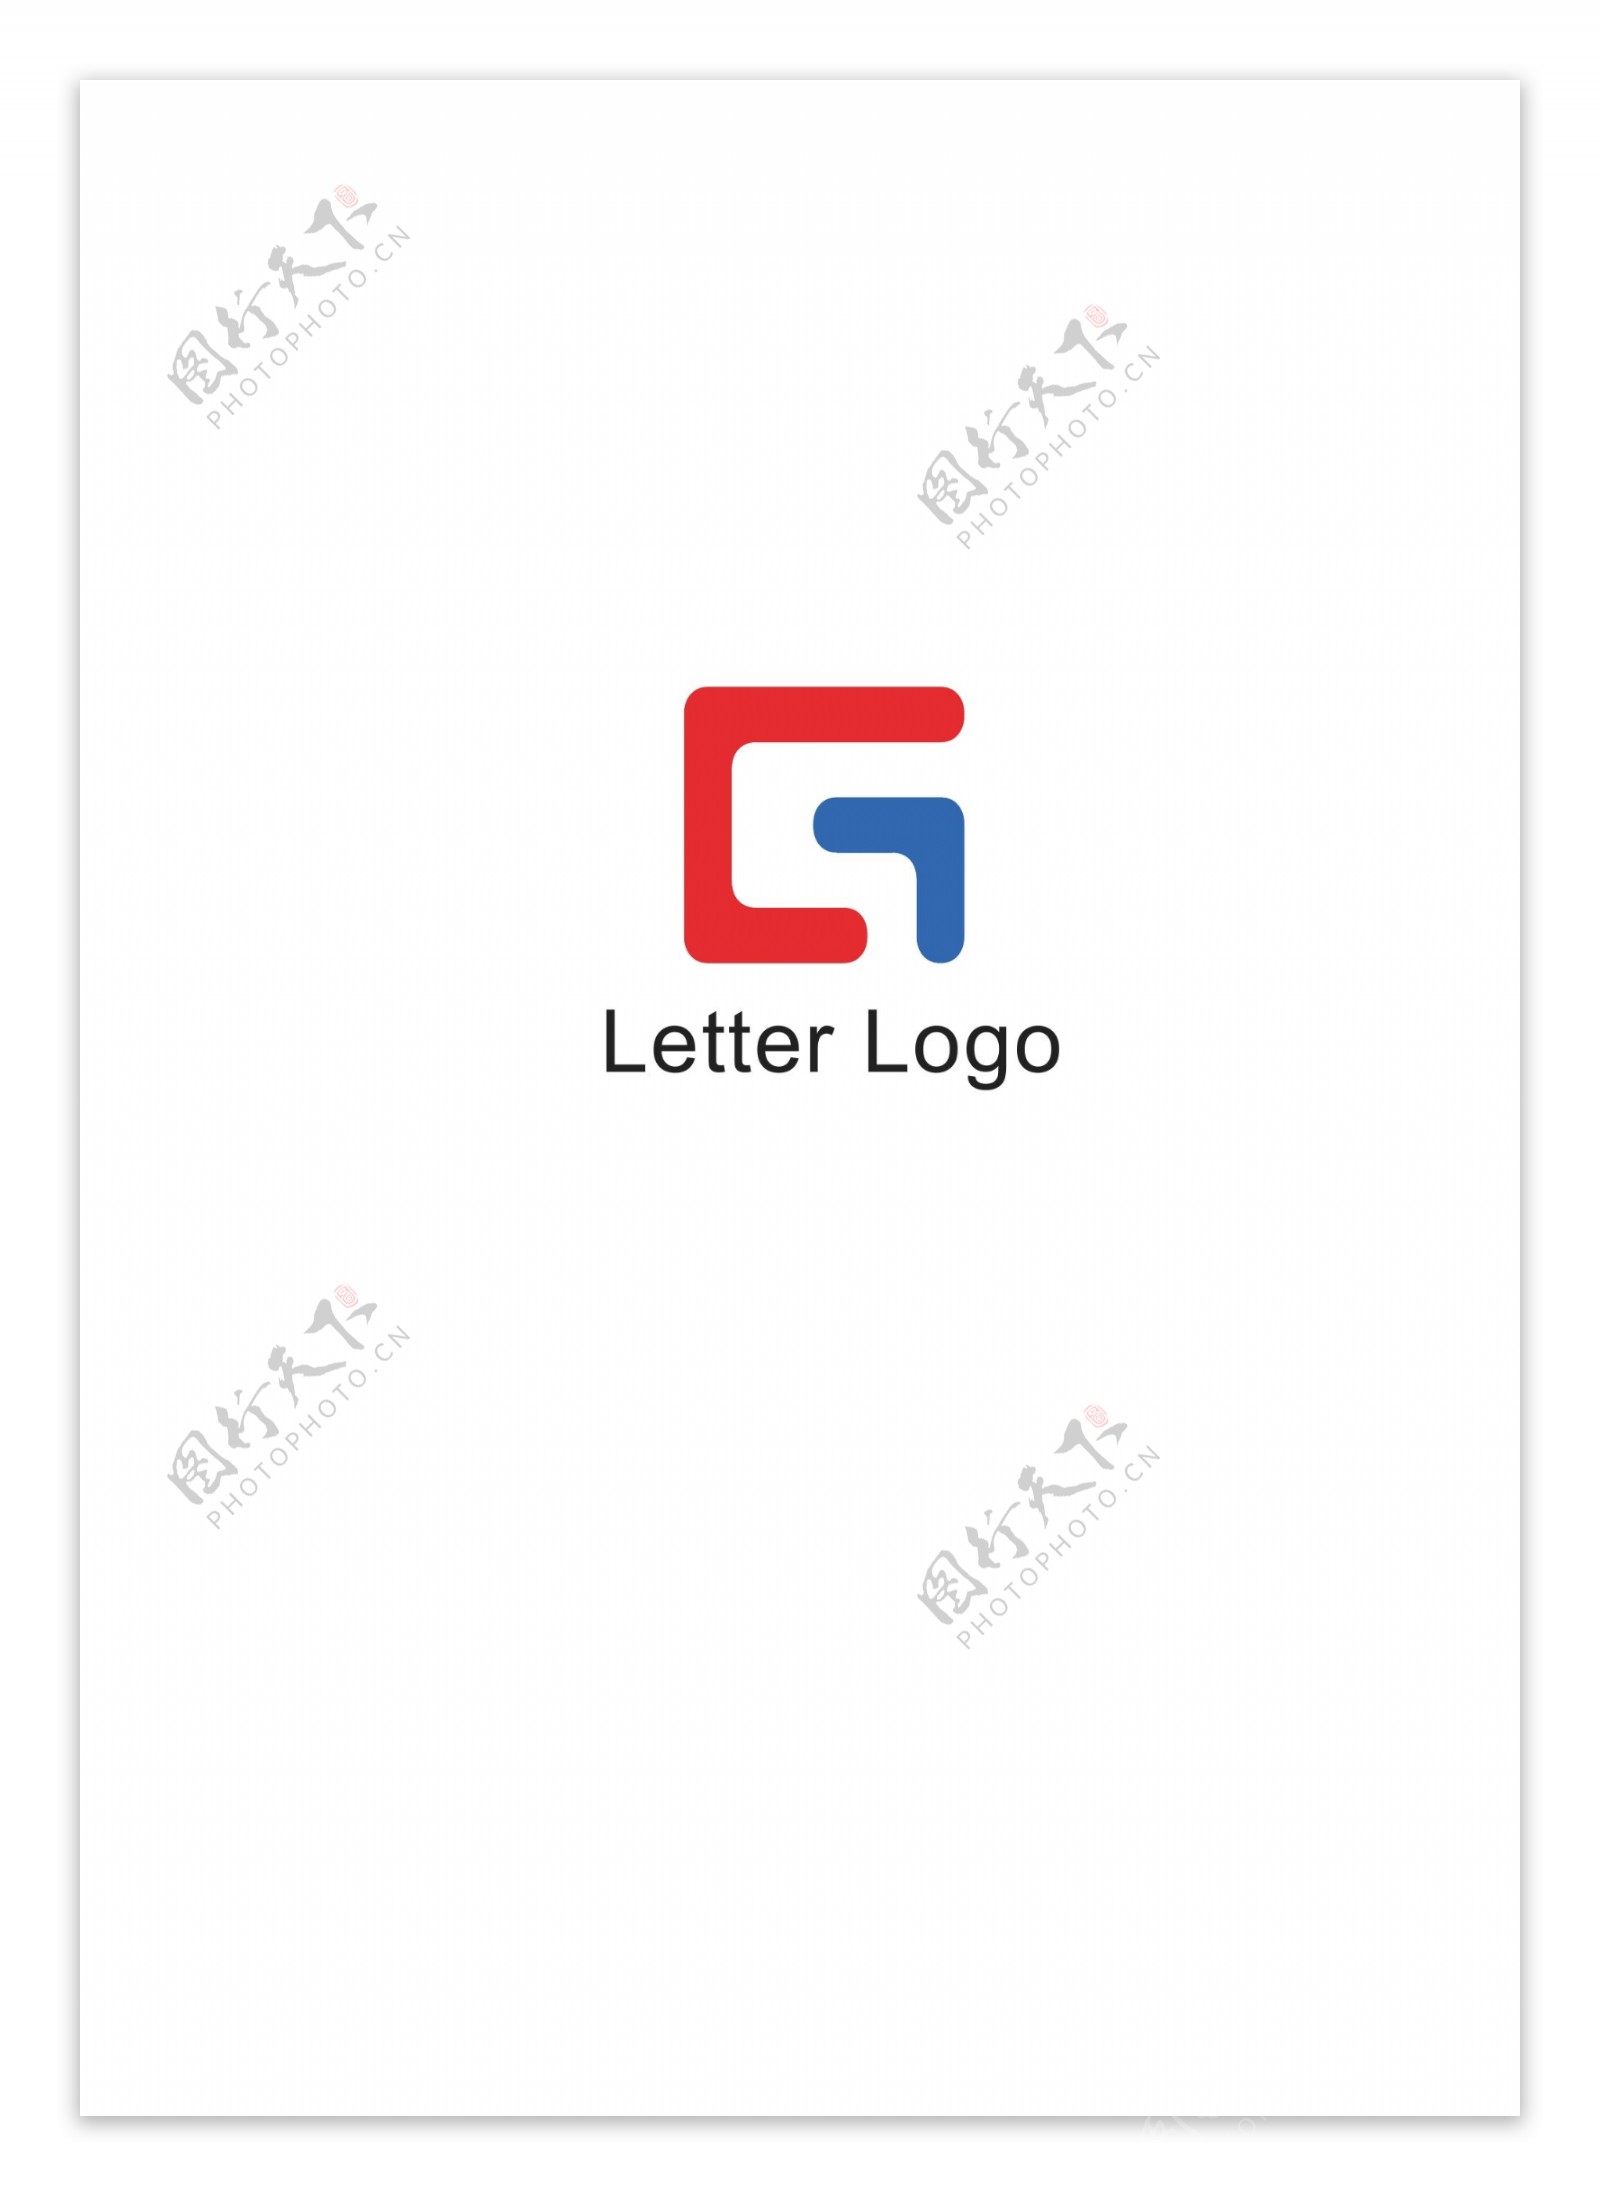 CG字母logo